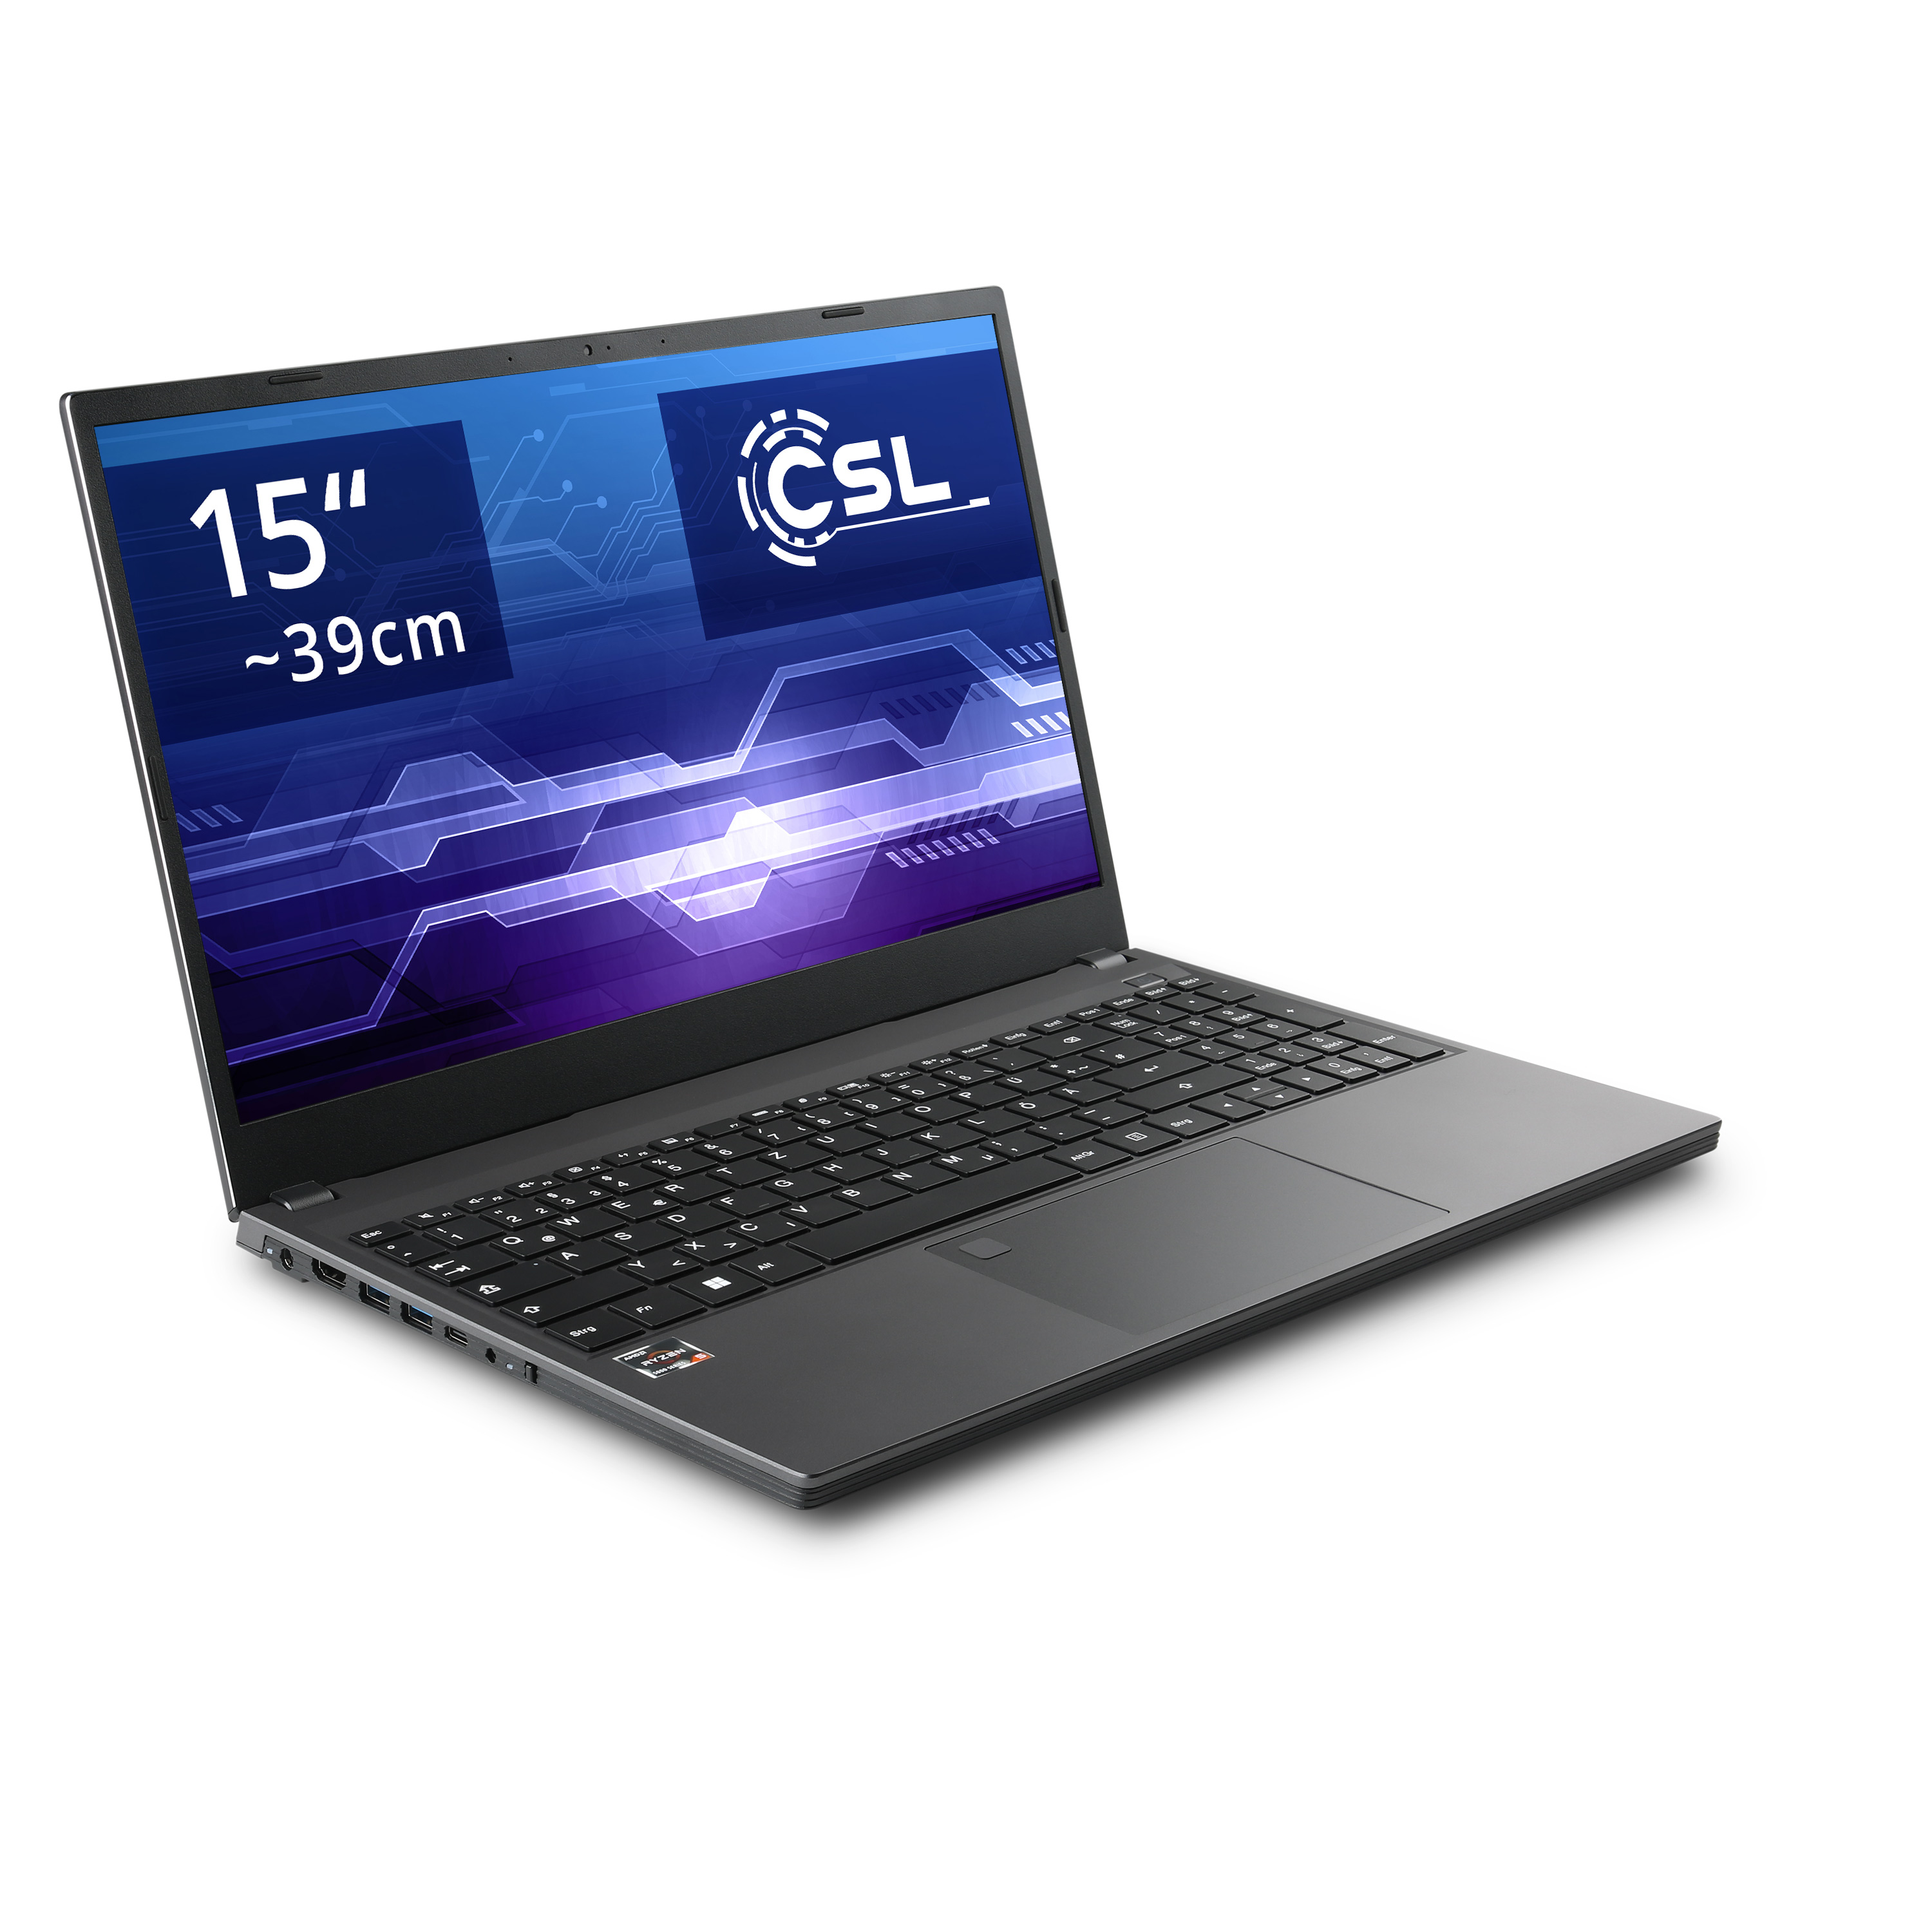 CSL R\'Evolve C15 5500U / 5 Ryzen™ Home, 1000GB Notebook GB Grau / Prozessor, Windows AMD / mit GB Zoll 16 11 1000 Display, SSD, 15 RAM, 16GB